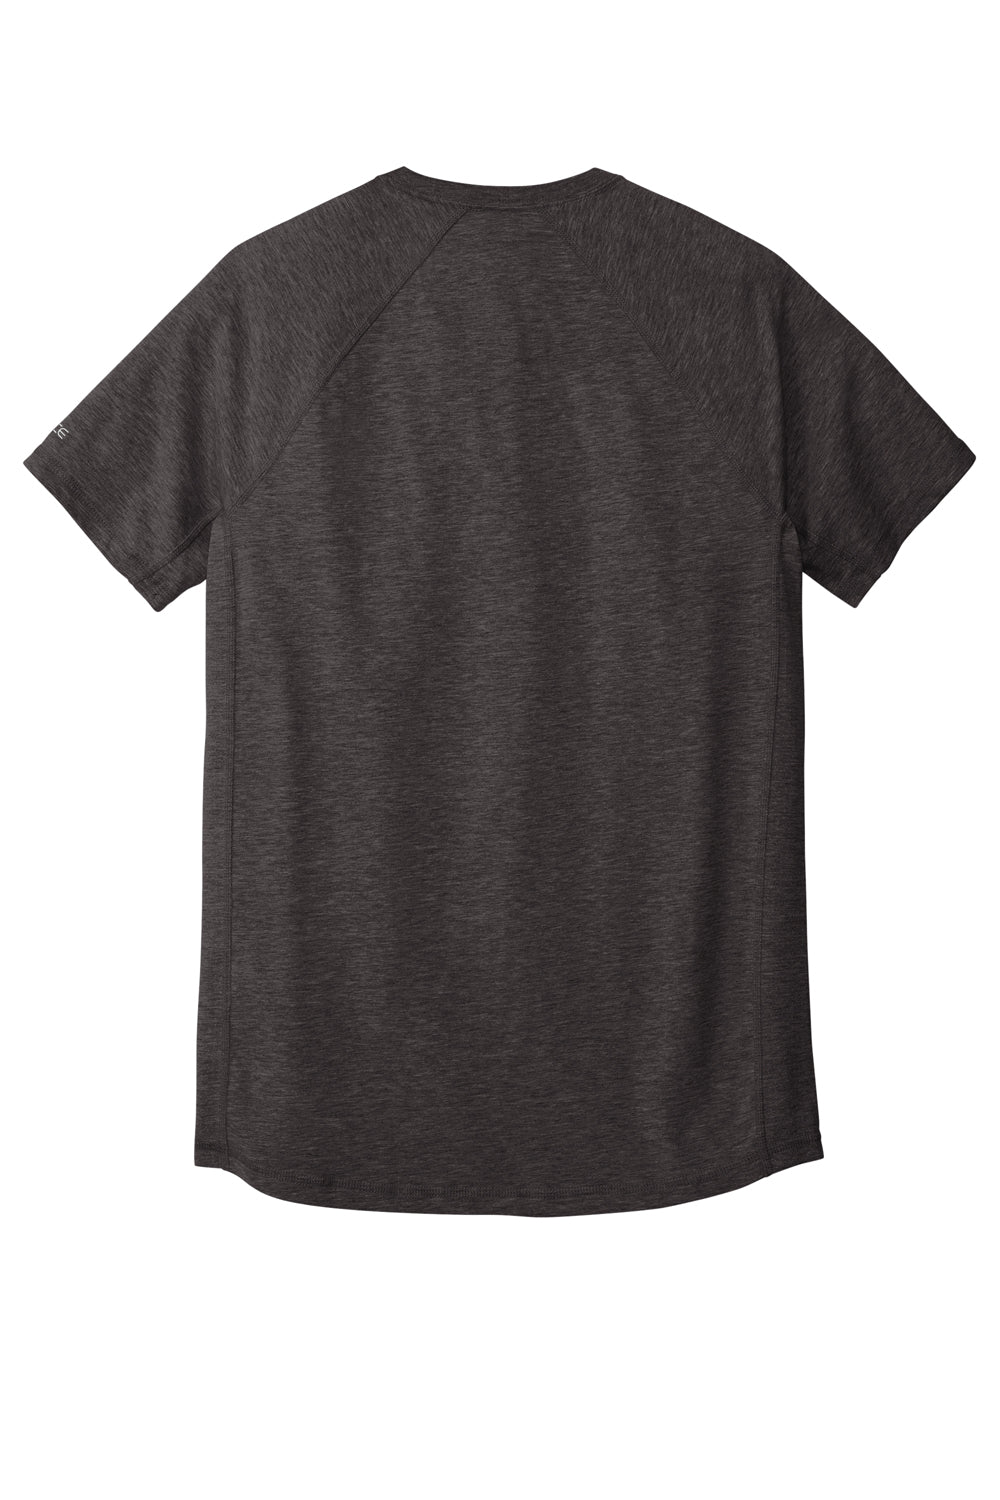 Carhartt CT104616 Mens Force Moisture Wicking Short Sleeve Crewneck T-Shirt w/ Pocket Heather Carbon Grey Flat Back